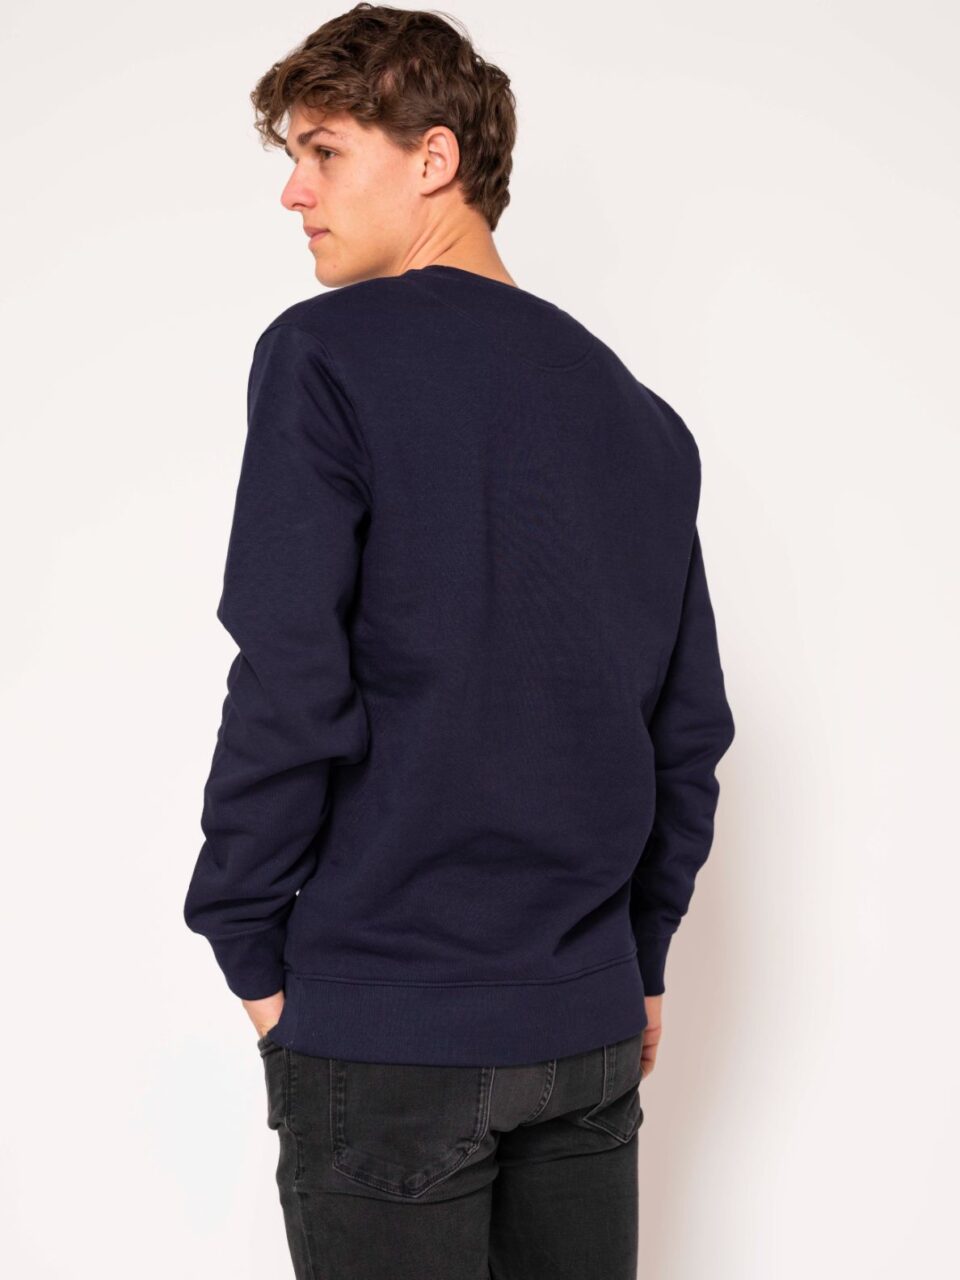 STROM_navy_blue_sweater